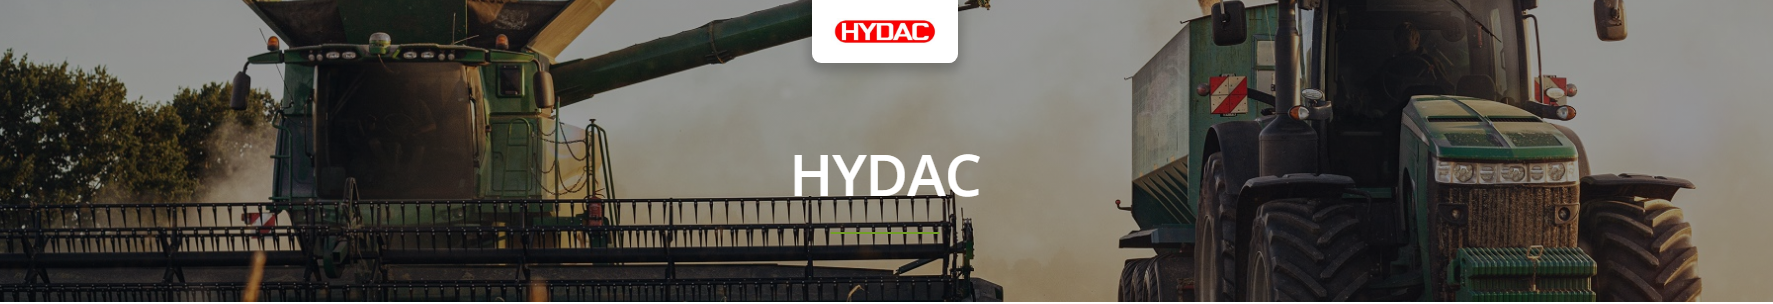 Hydac Hydraulic Valves